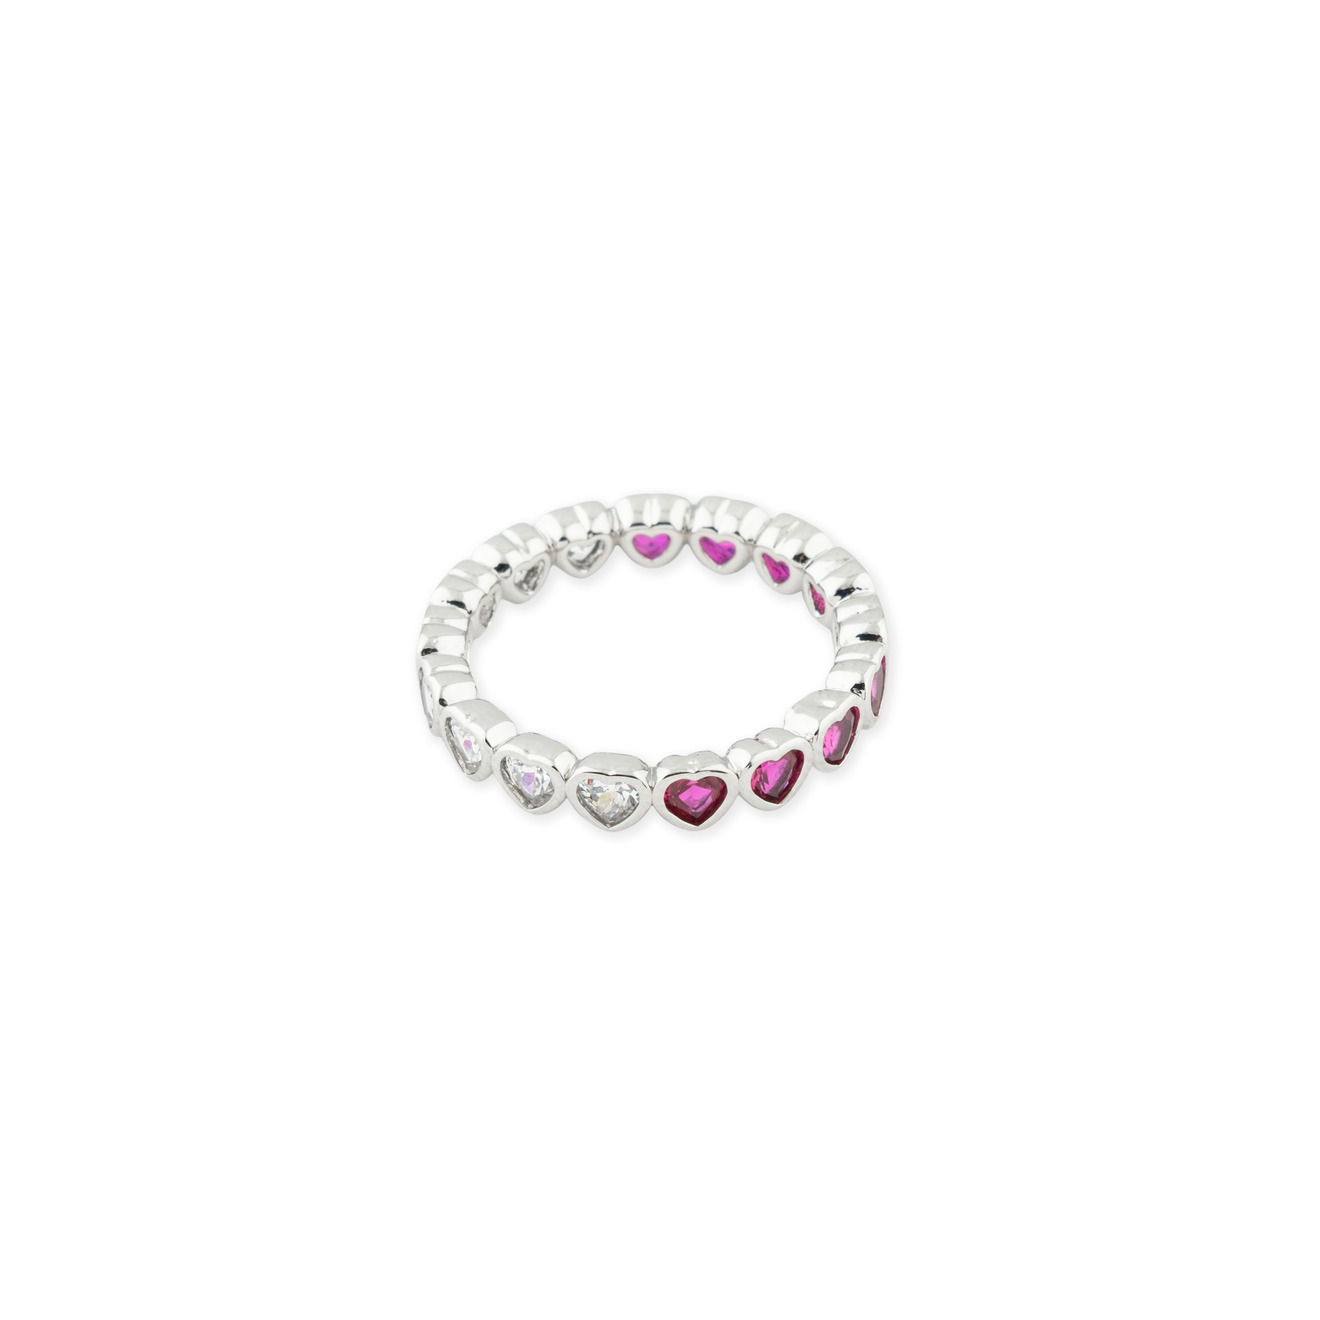 Herald Percy Серебристое кольцо из сердец с белыми и розовыми кристаллами lisa smith серебристое кольцо с кисточкой из цепочек